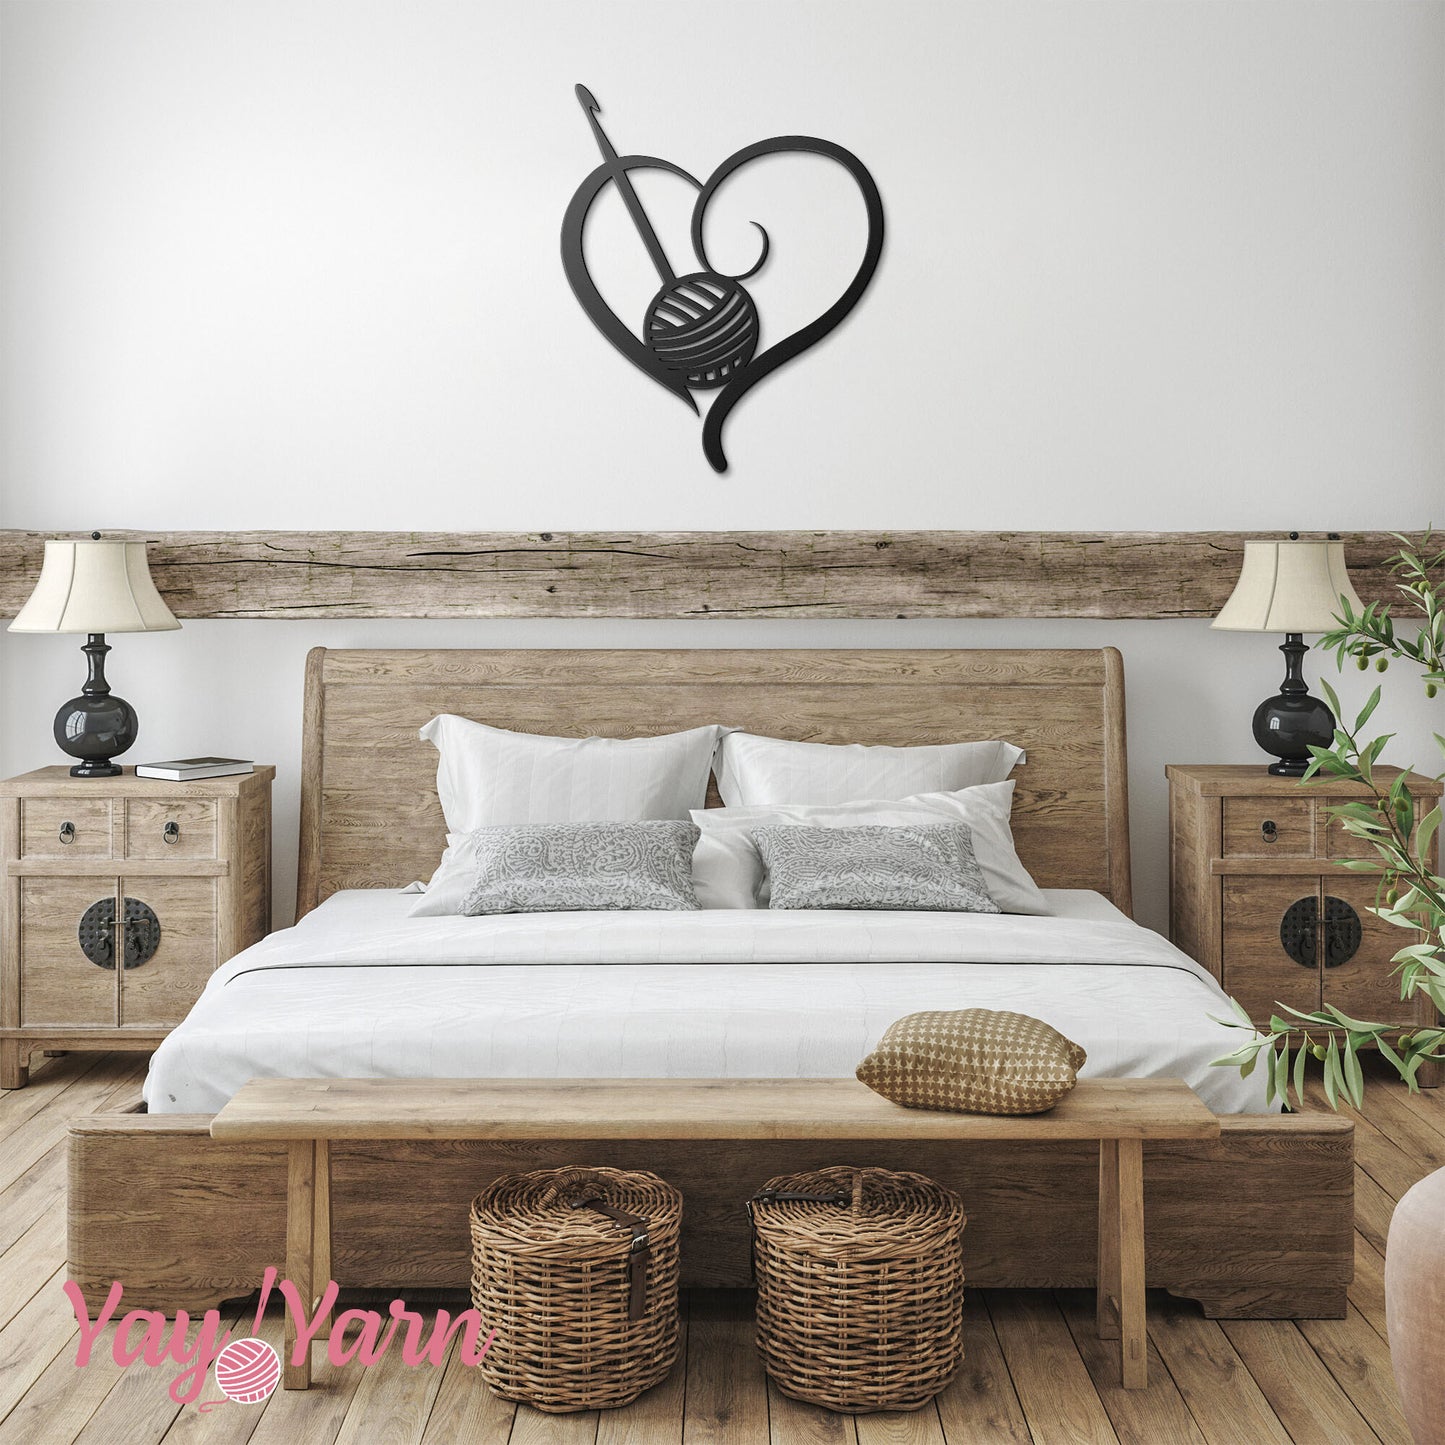 Crochet Heart Metal Wall Art Black on White While in Boho Bedroom